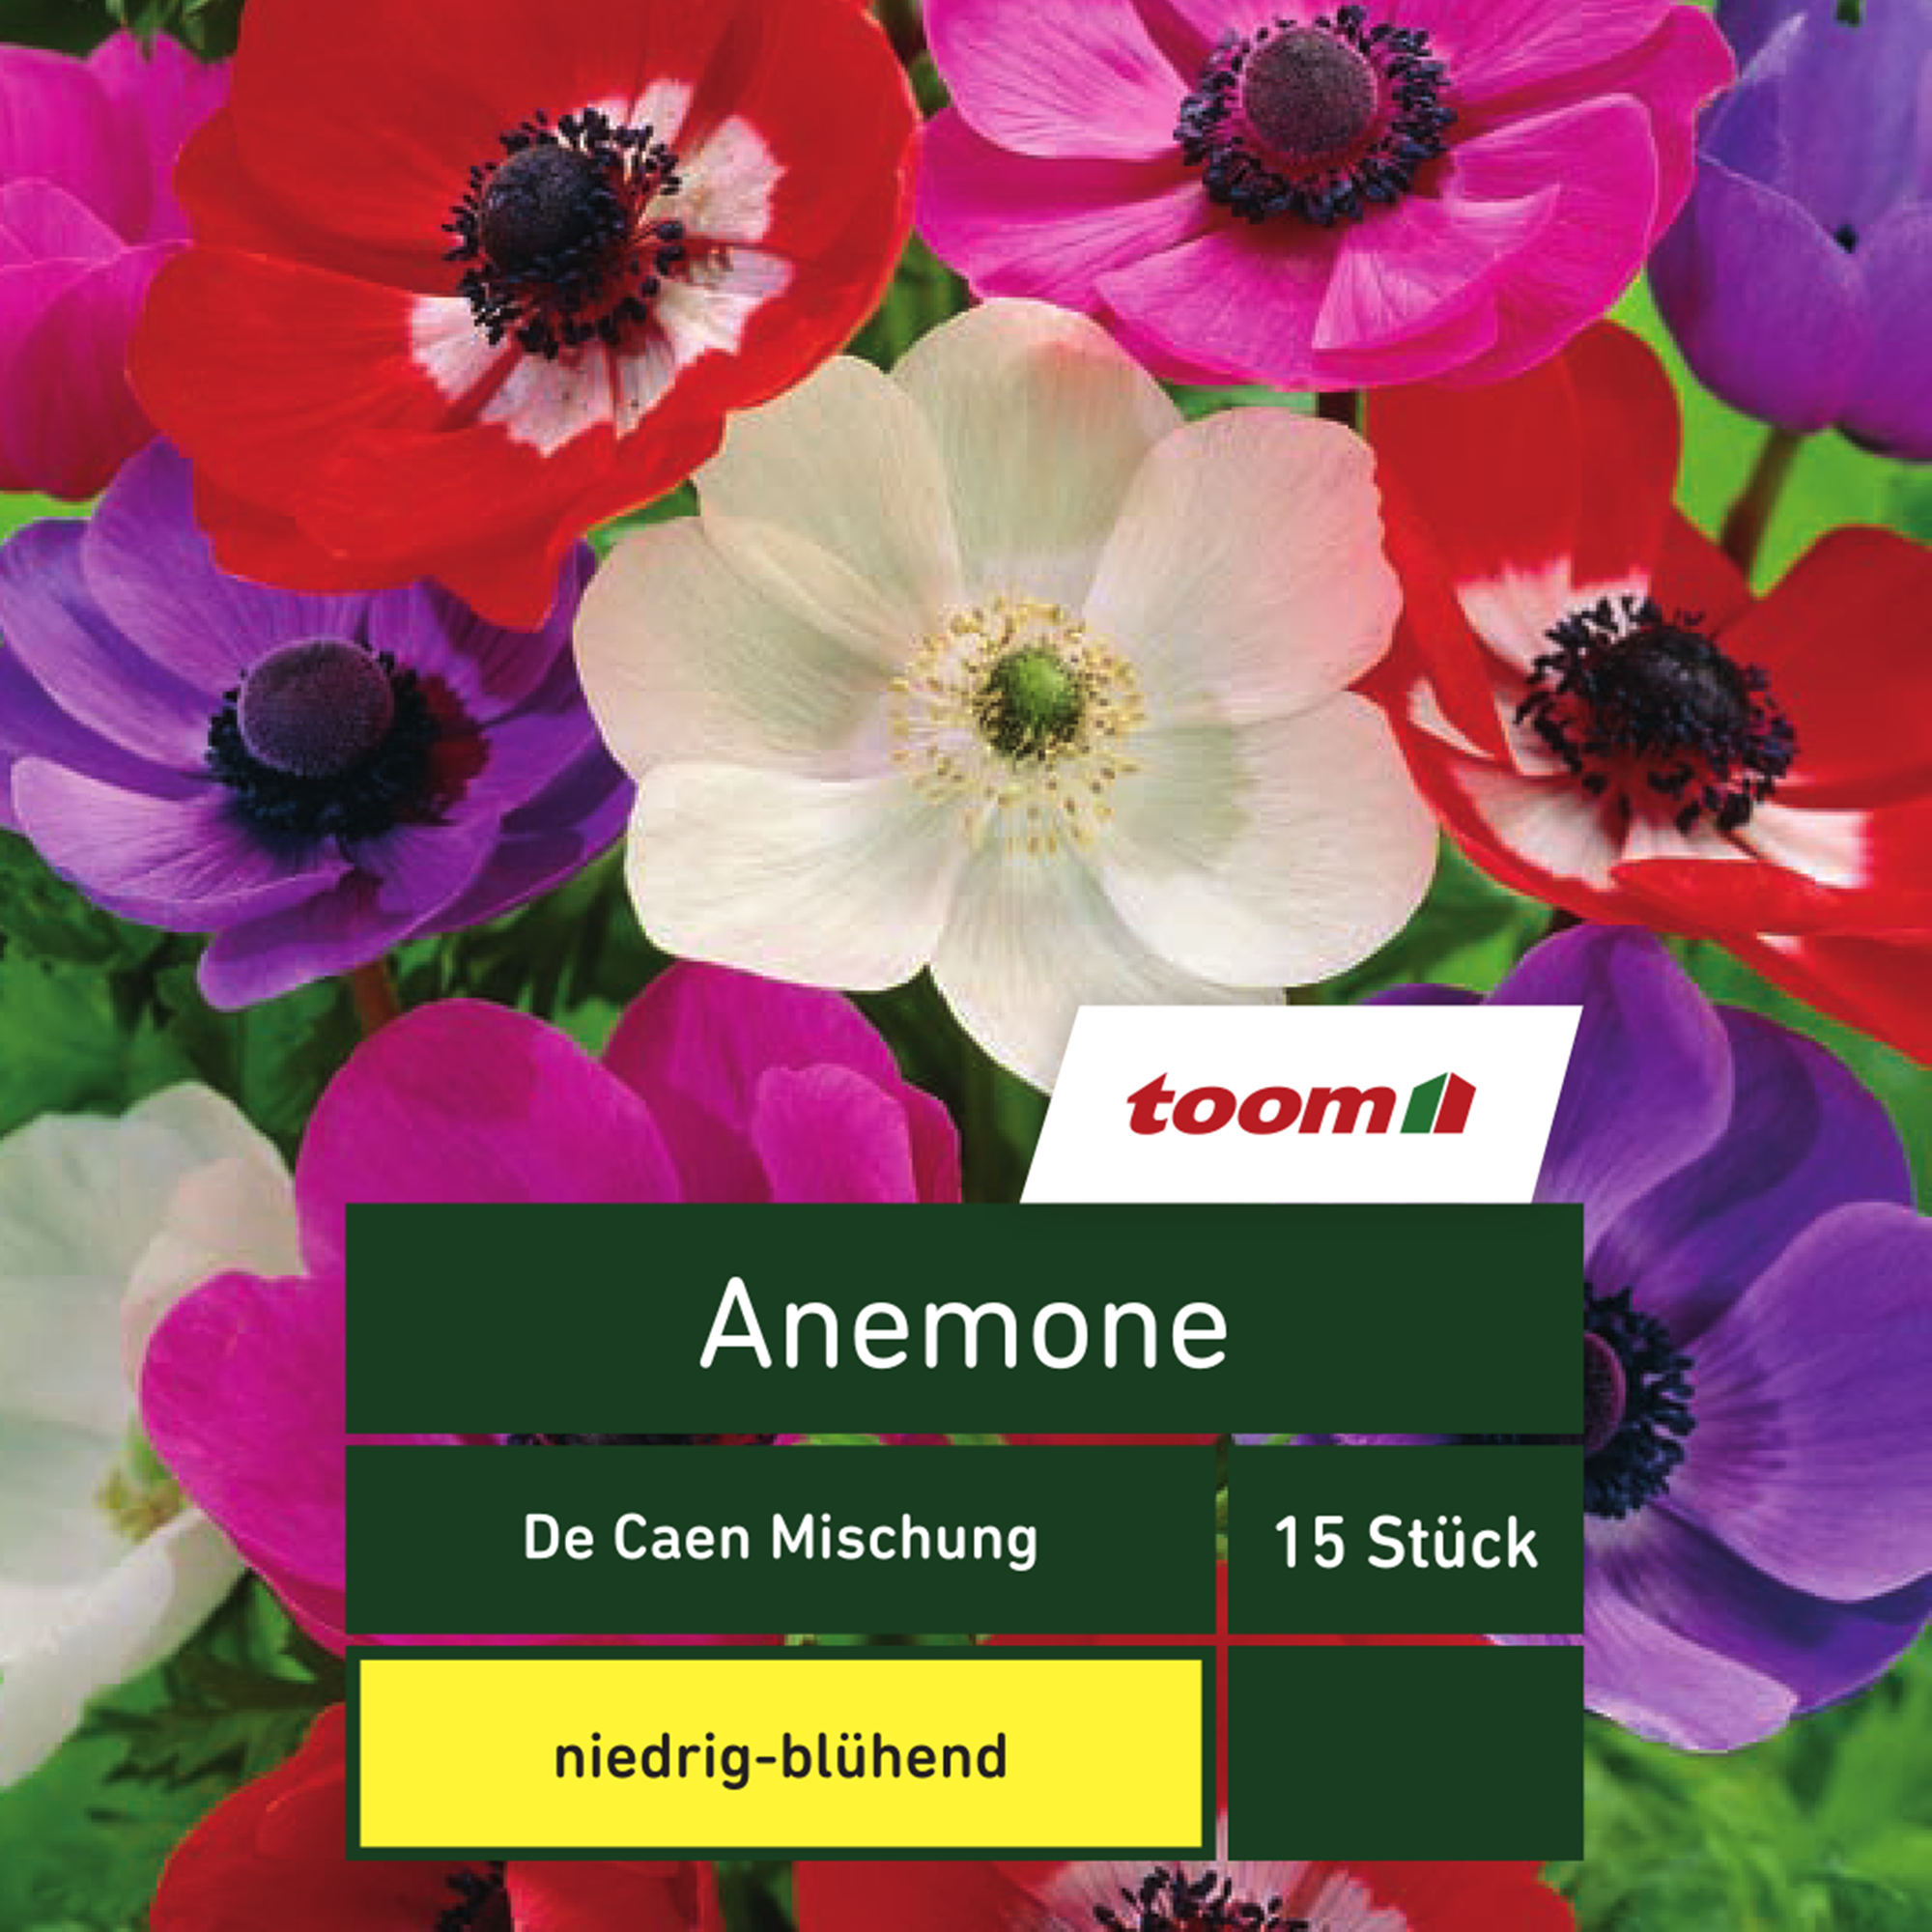 Anemone 'De Caen Mischung', 15 Stück, mehrfarbig + product picture